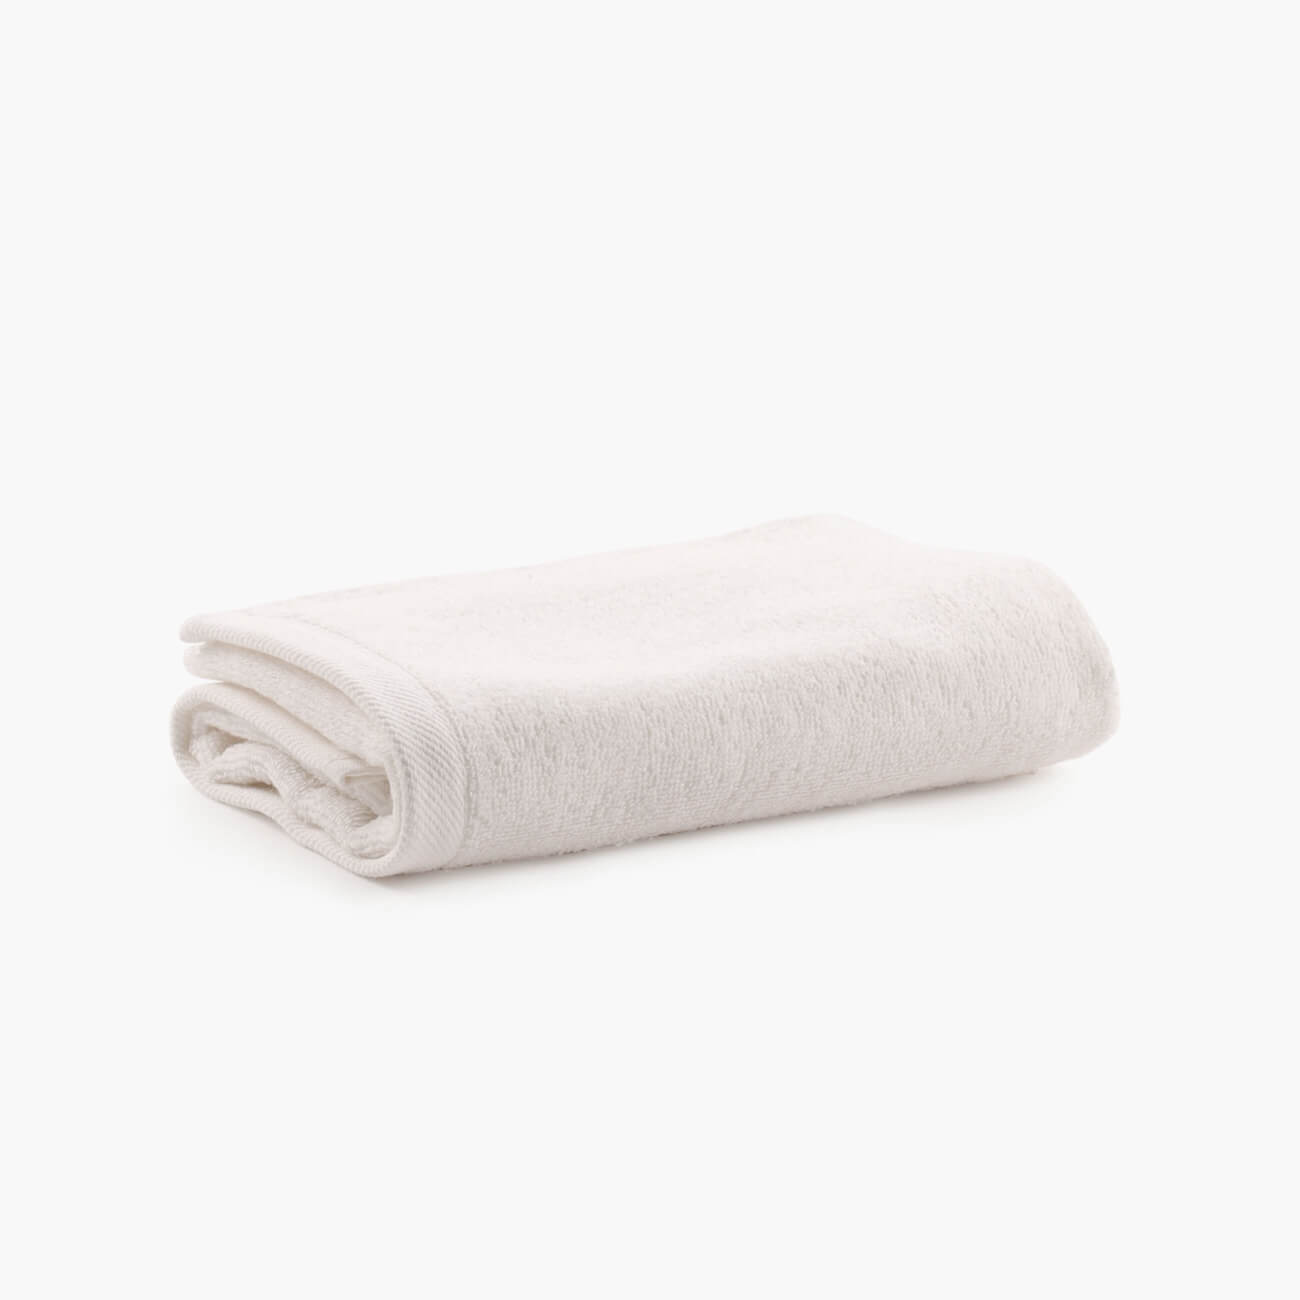 Полотенце, 40х60 см, хлопок, молочное, Wellness натуральное бумажное полотенце tork